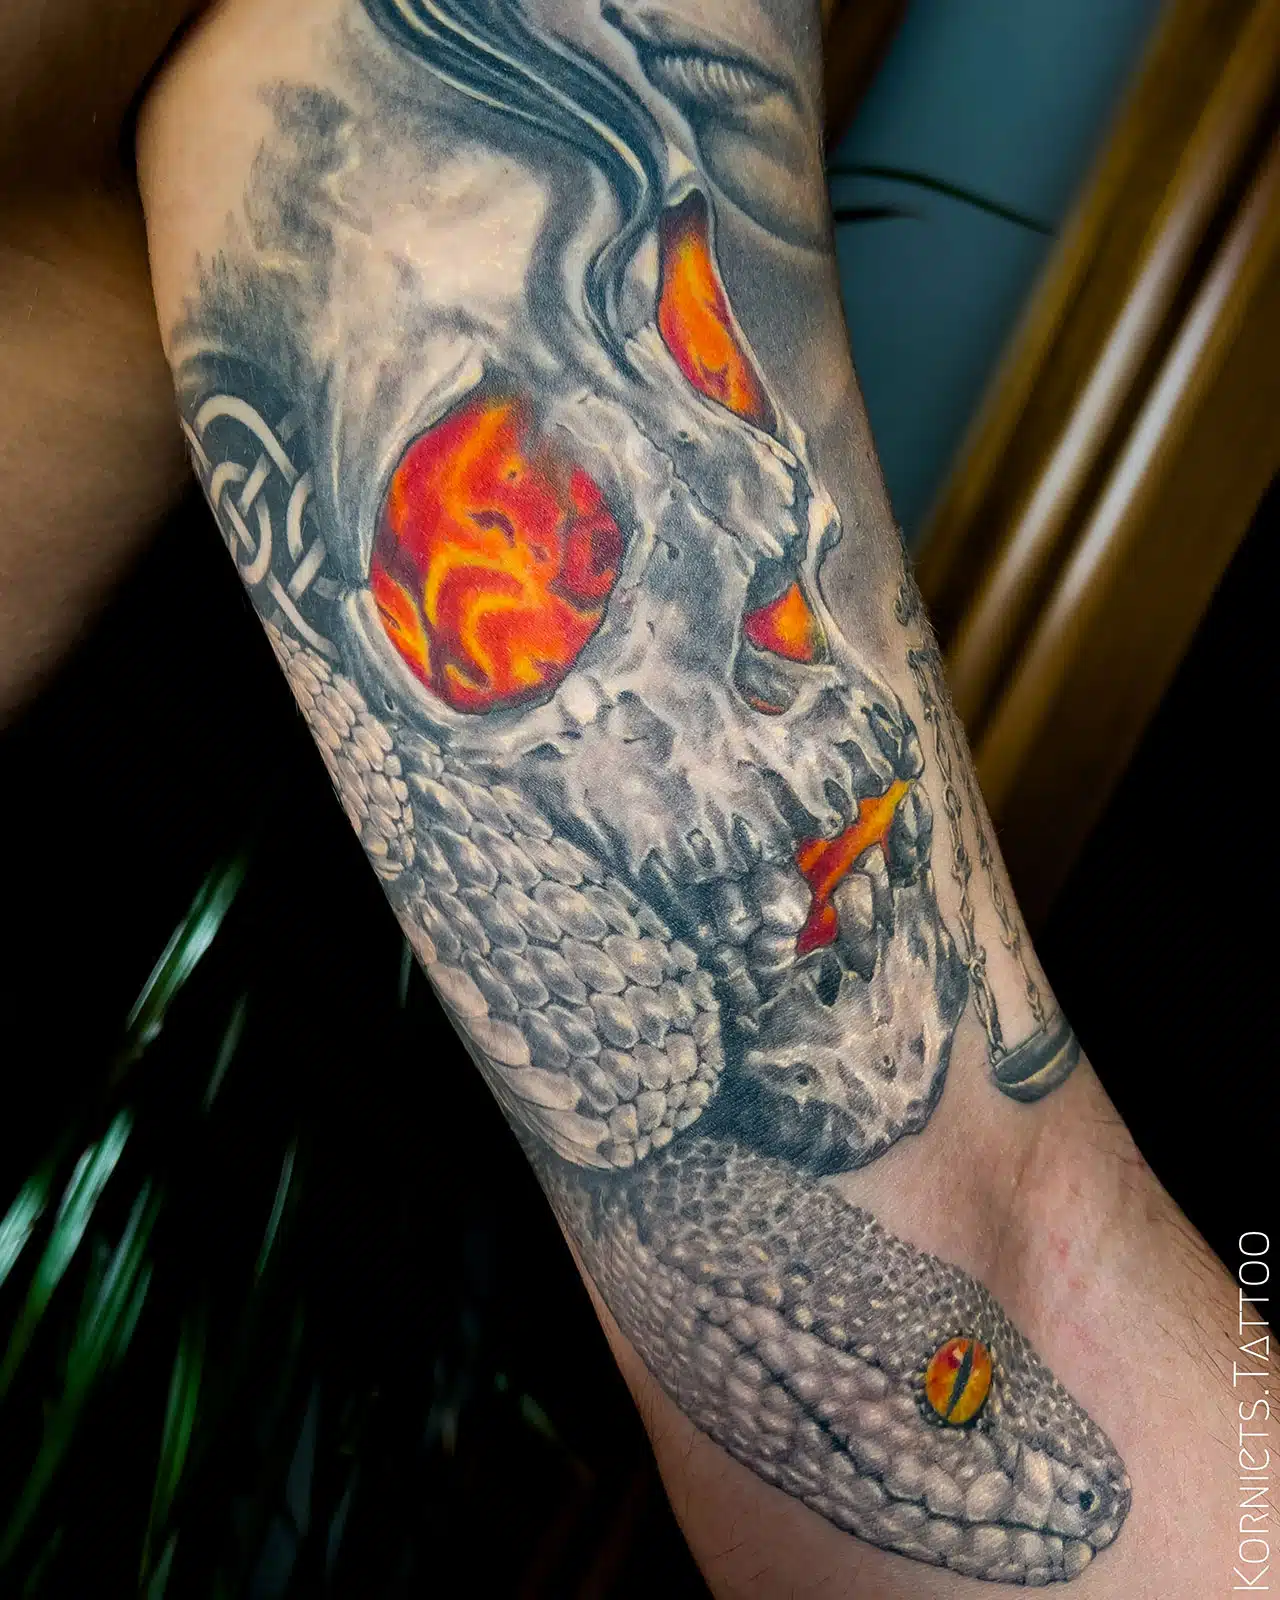 Skull and snake tattoo